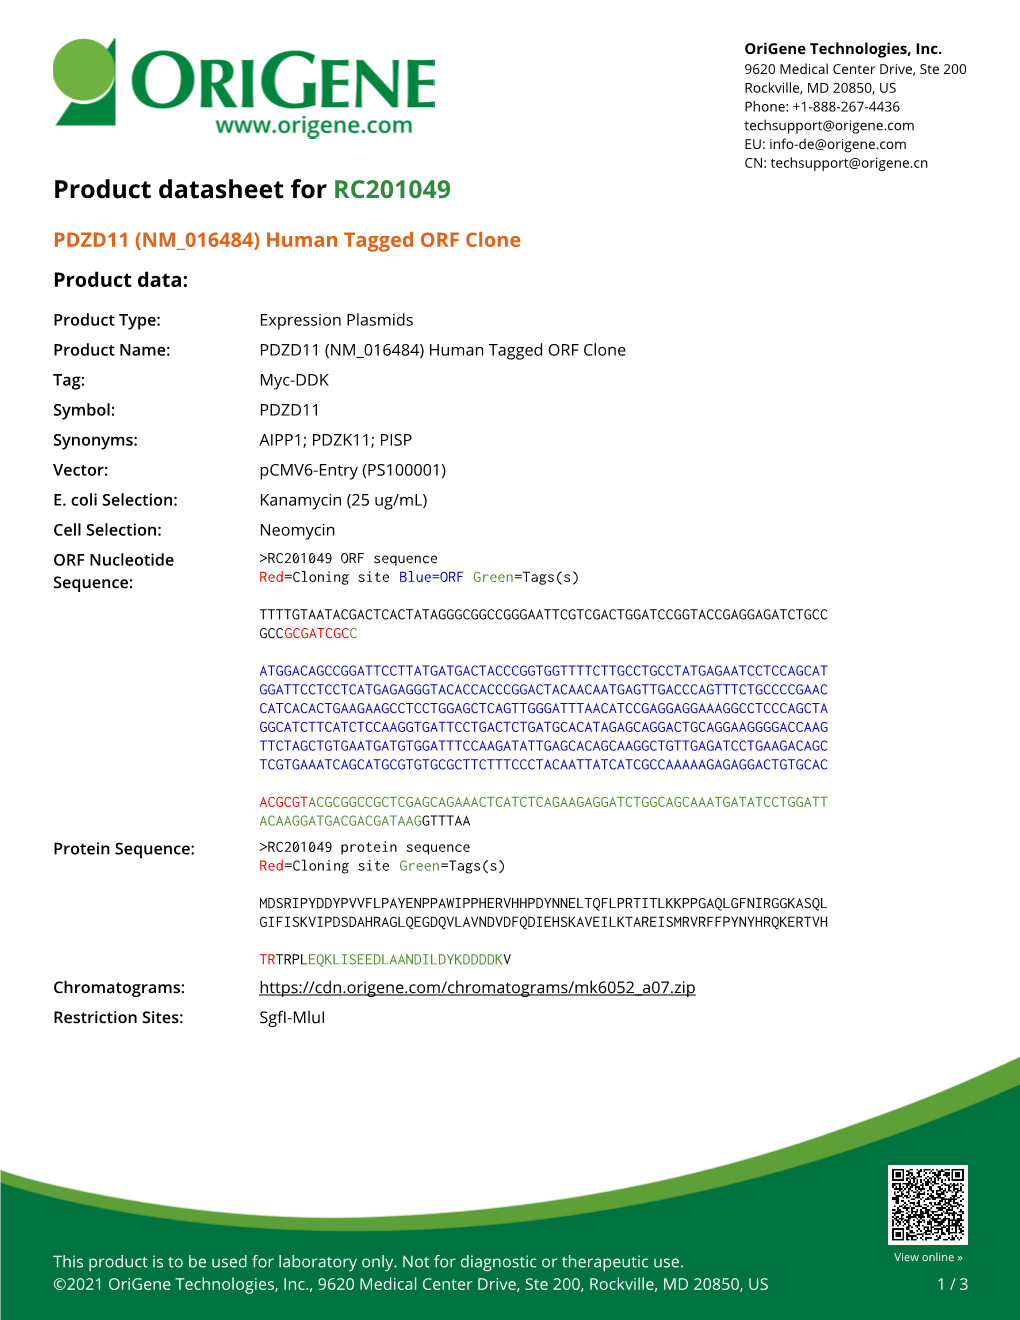 PDZD11 (NM 016484) Human Tagged ORF Clone – RC201049 | Origene